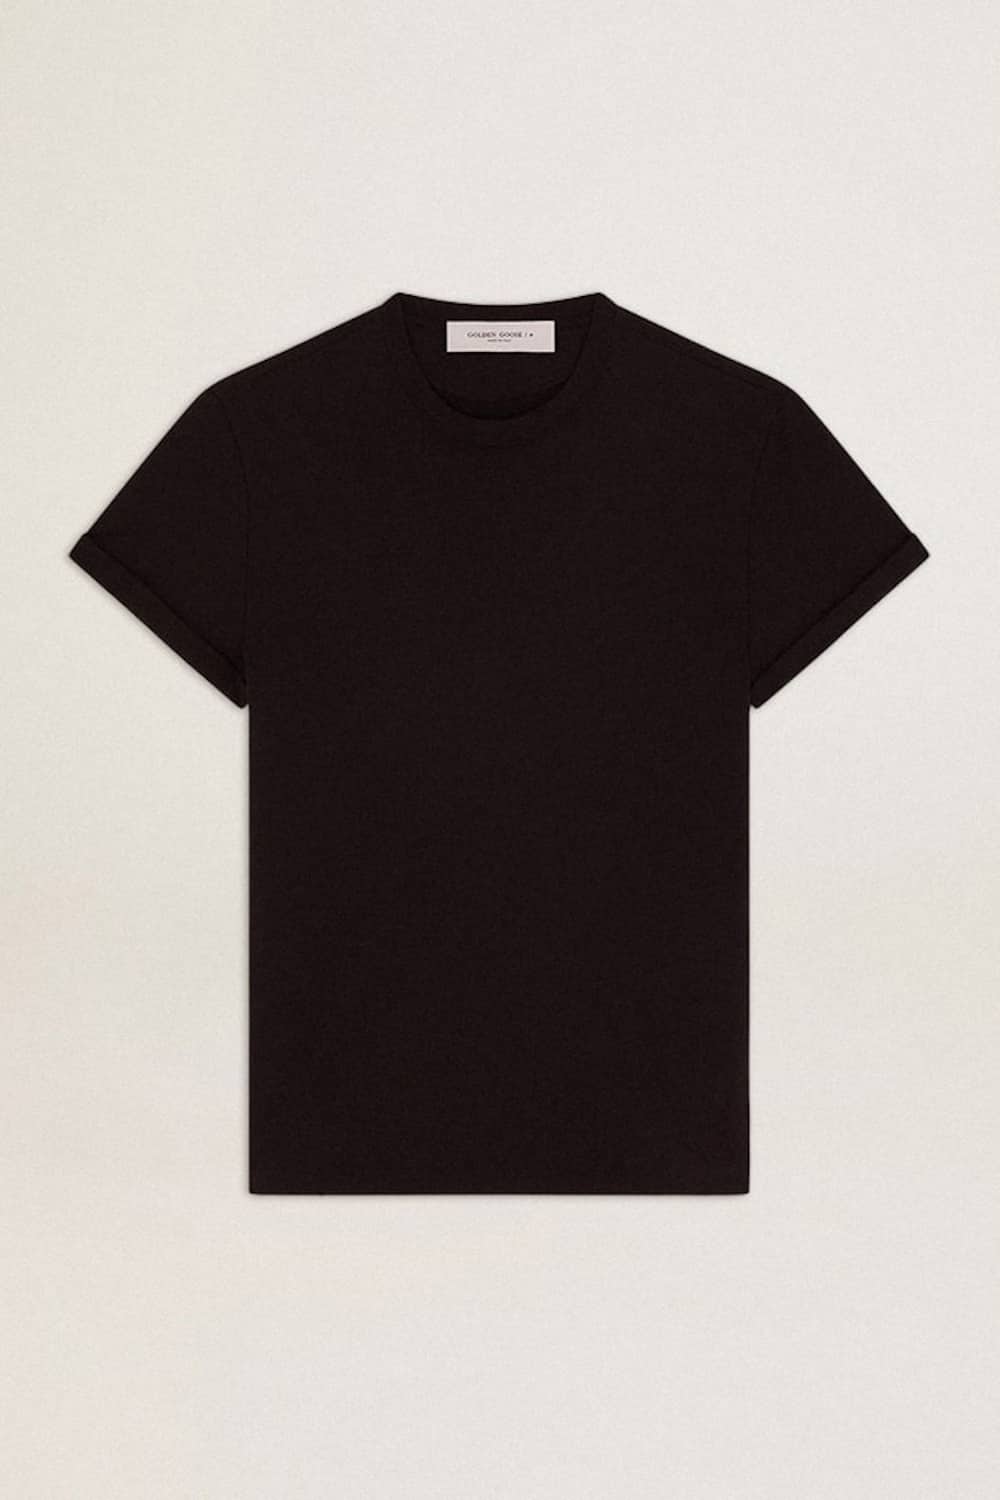 Golden Goose - Women’s regular-fit distressed T-shirt in black in 